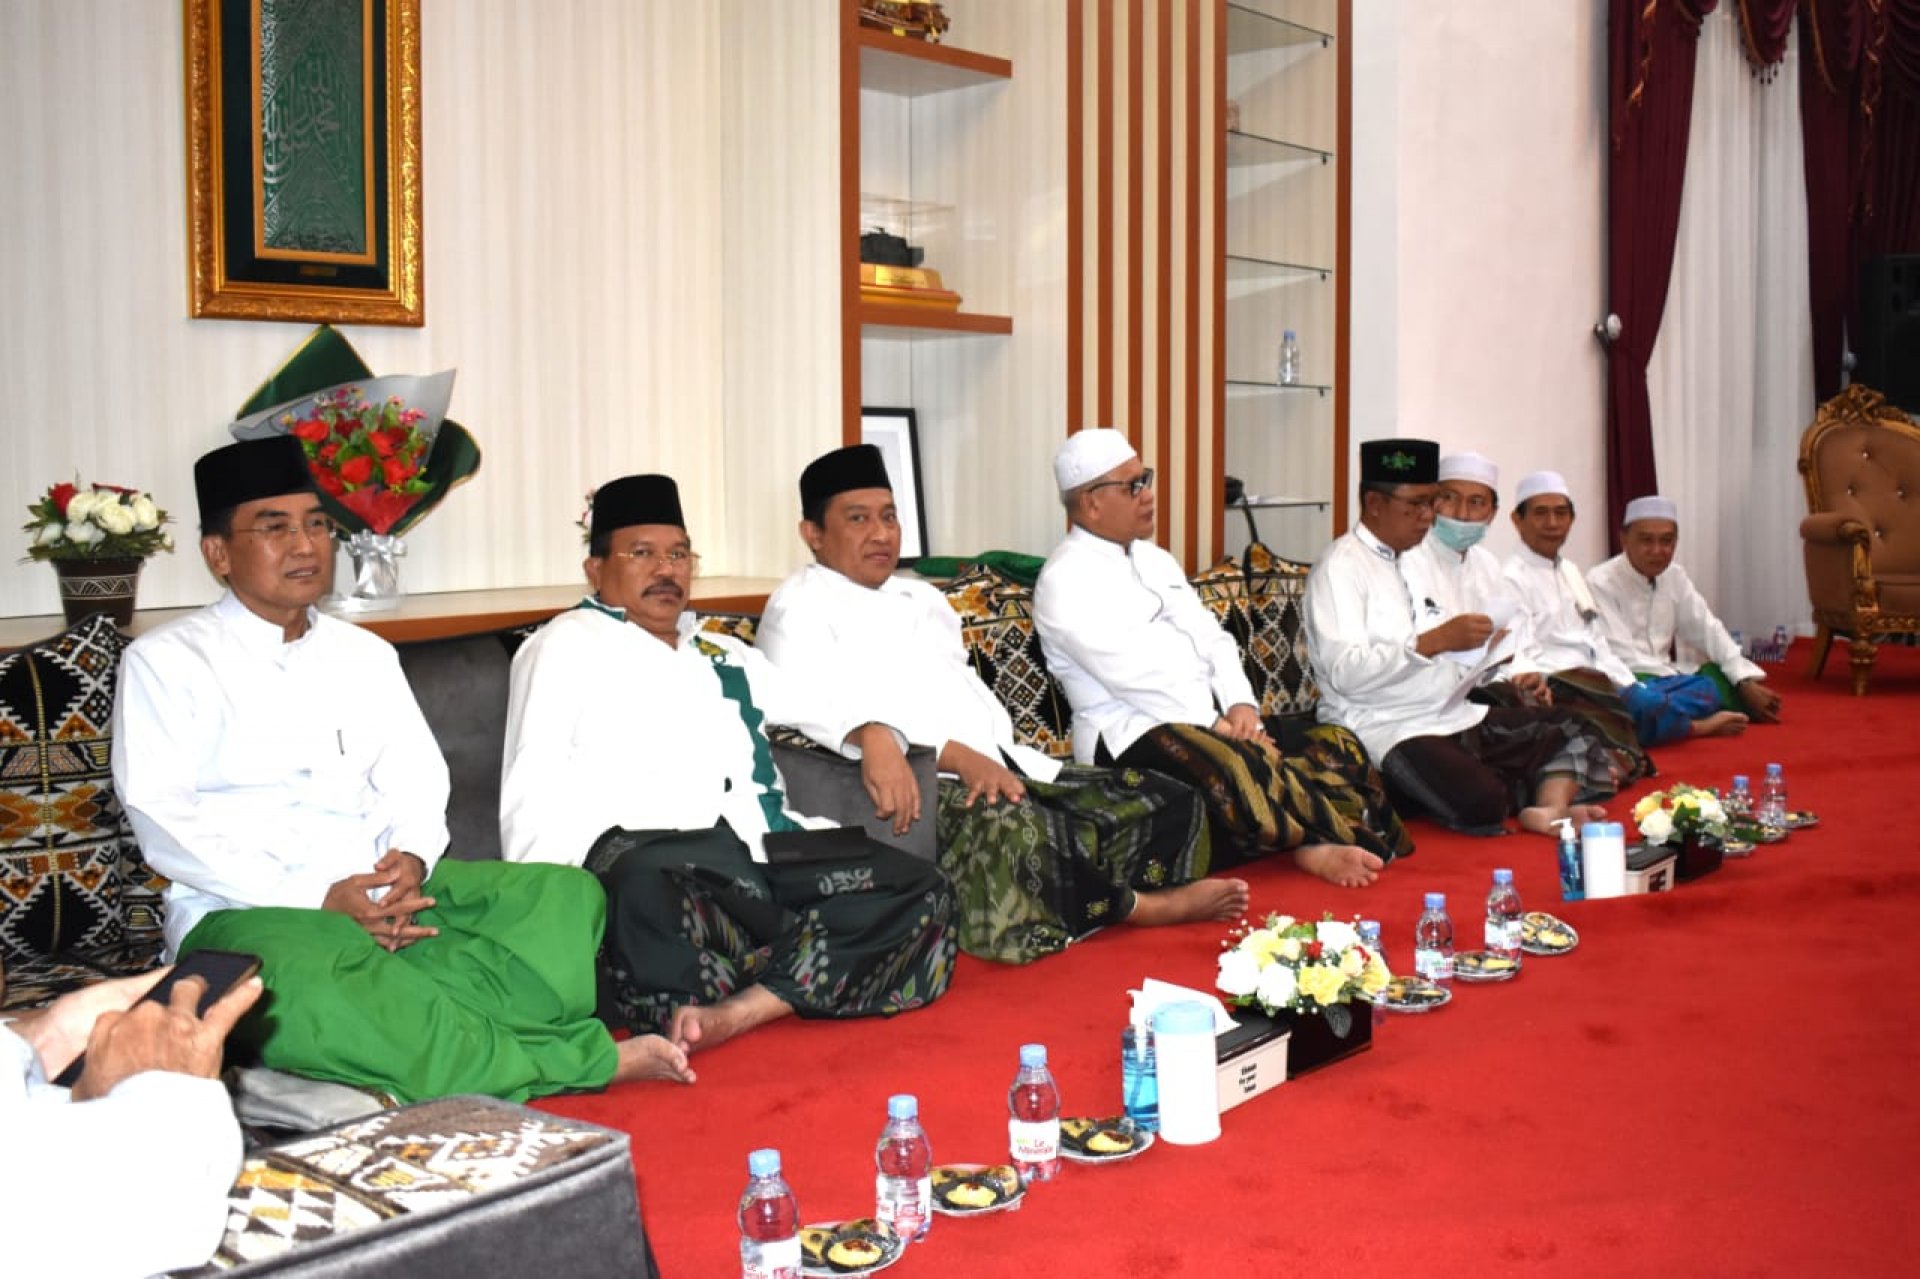 Wagub Kalteng Ajak Kader NU Hidupkan Tradisi Lailatul Ijtima untuk Pererat Silaturahmi